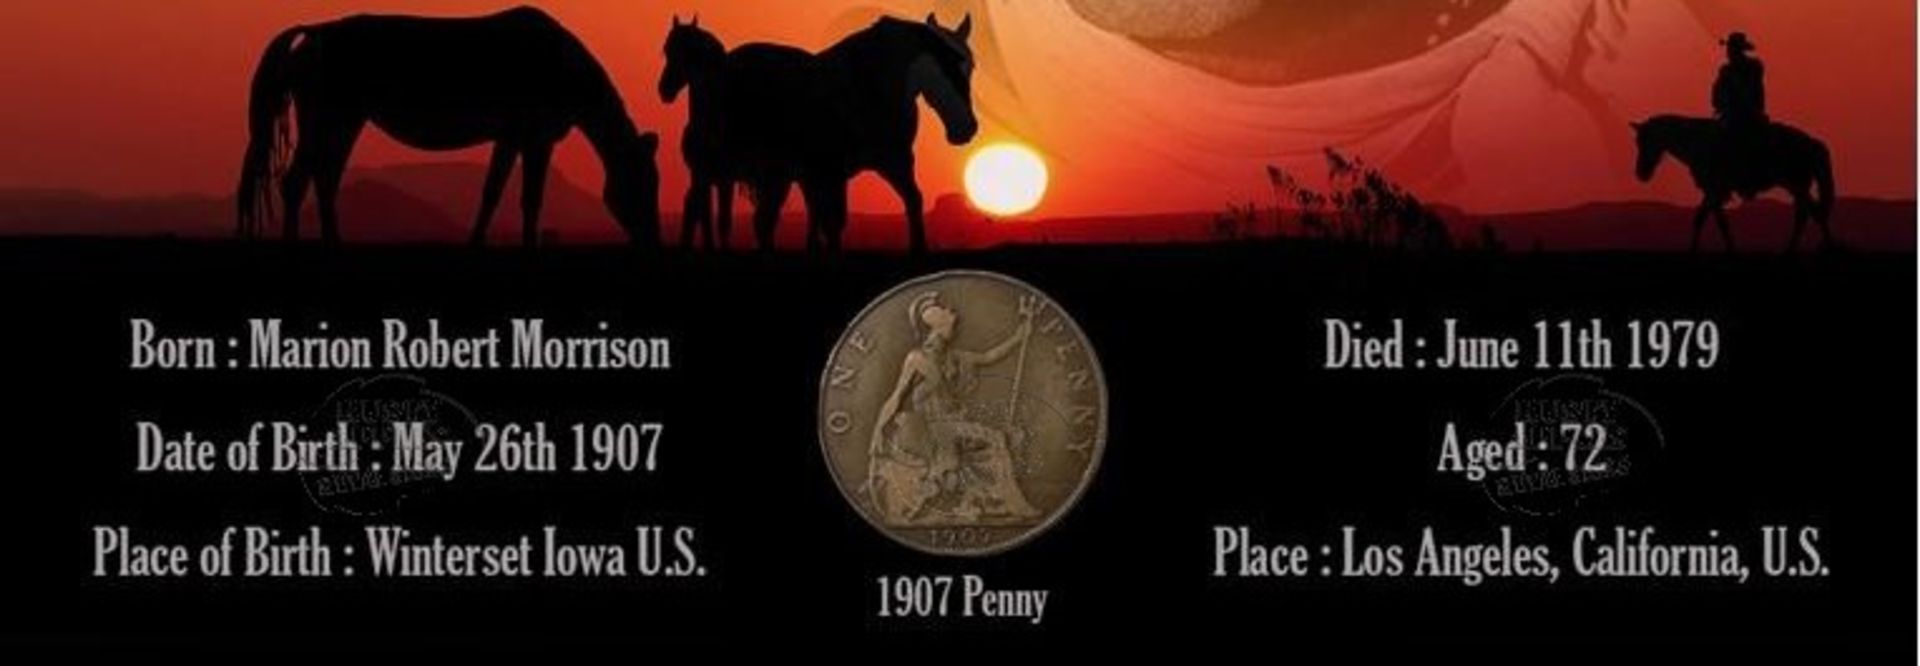 John Wayne ' The Duke ' Original 1907 Birth Penny Metal Designed Info Plaque - Image 2 of 3